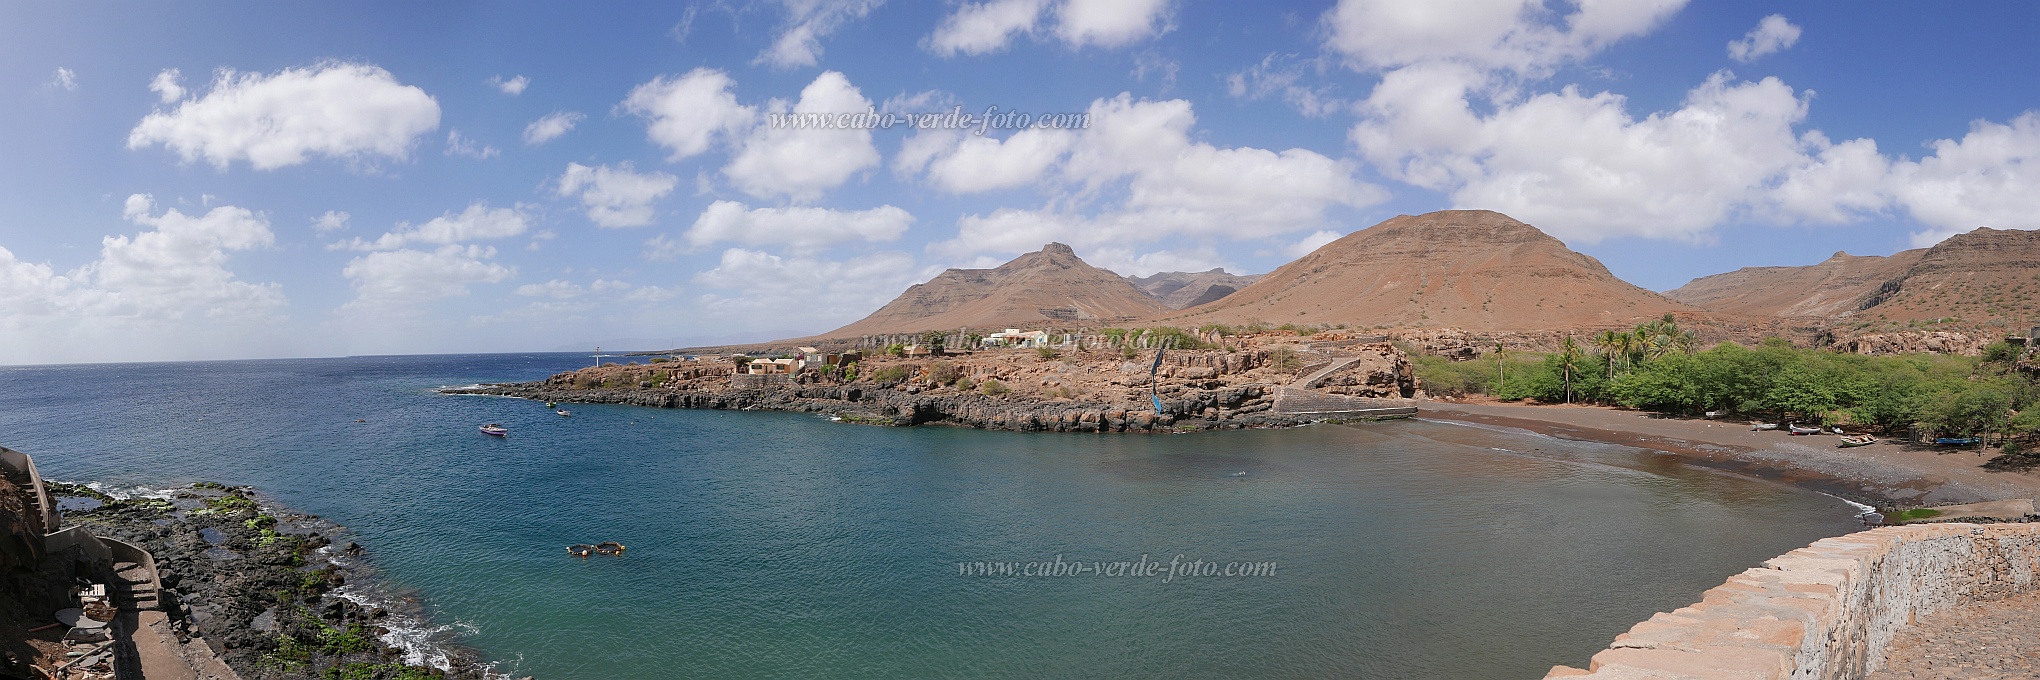 So Nicolau : Carrical : baia : Landscape SeaCabo Verde Foto Gallery